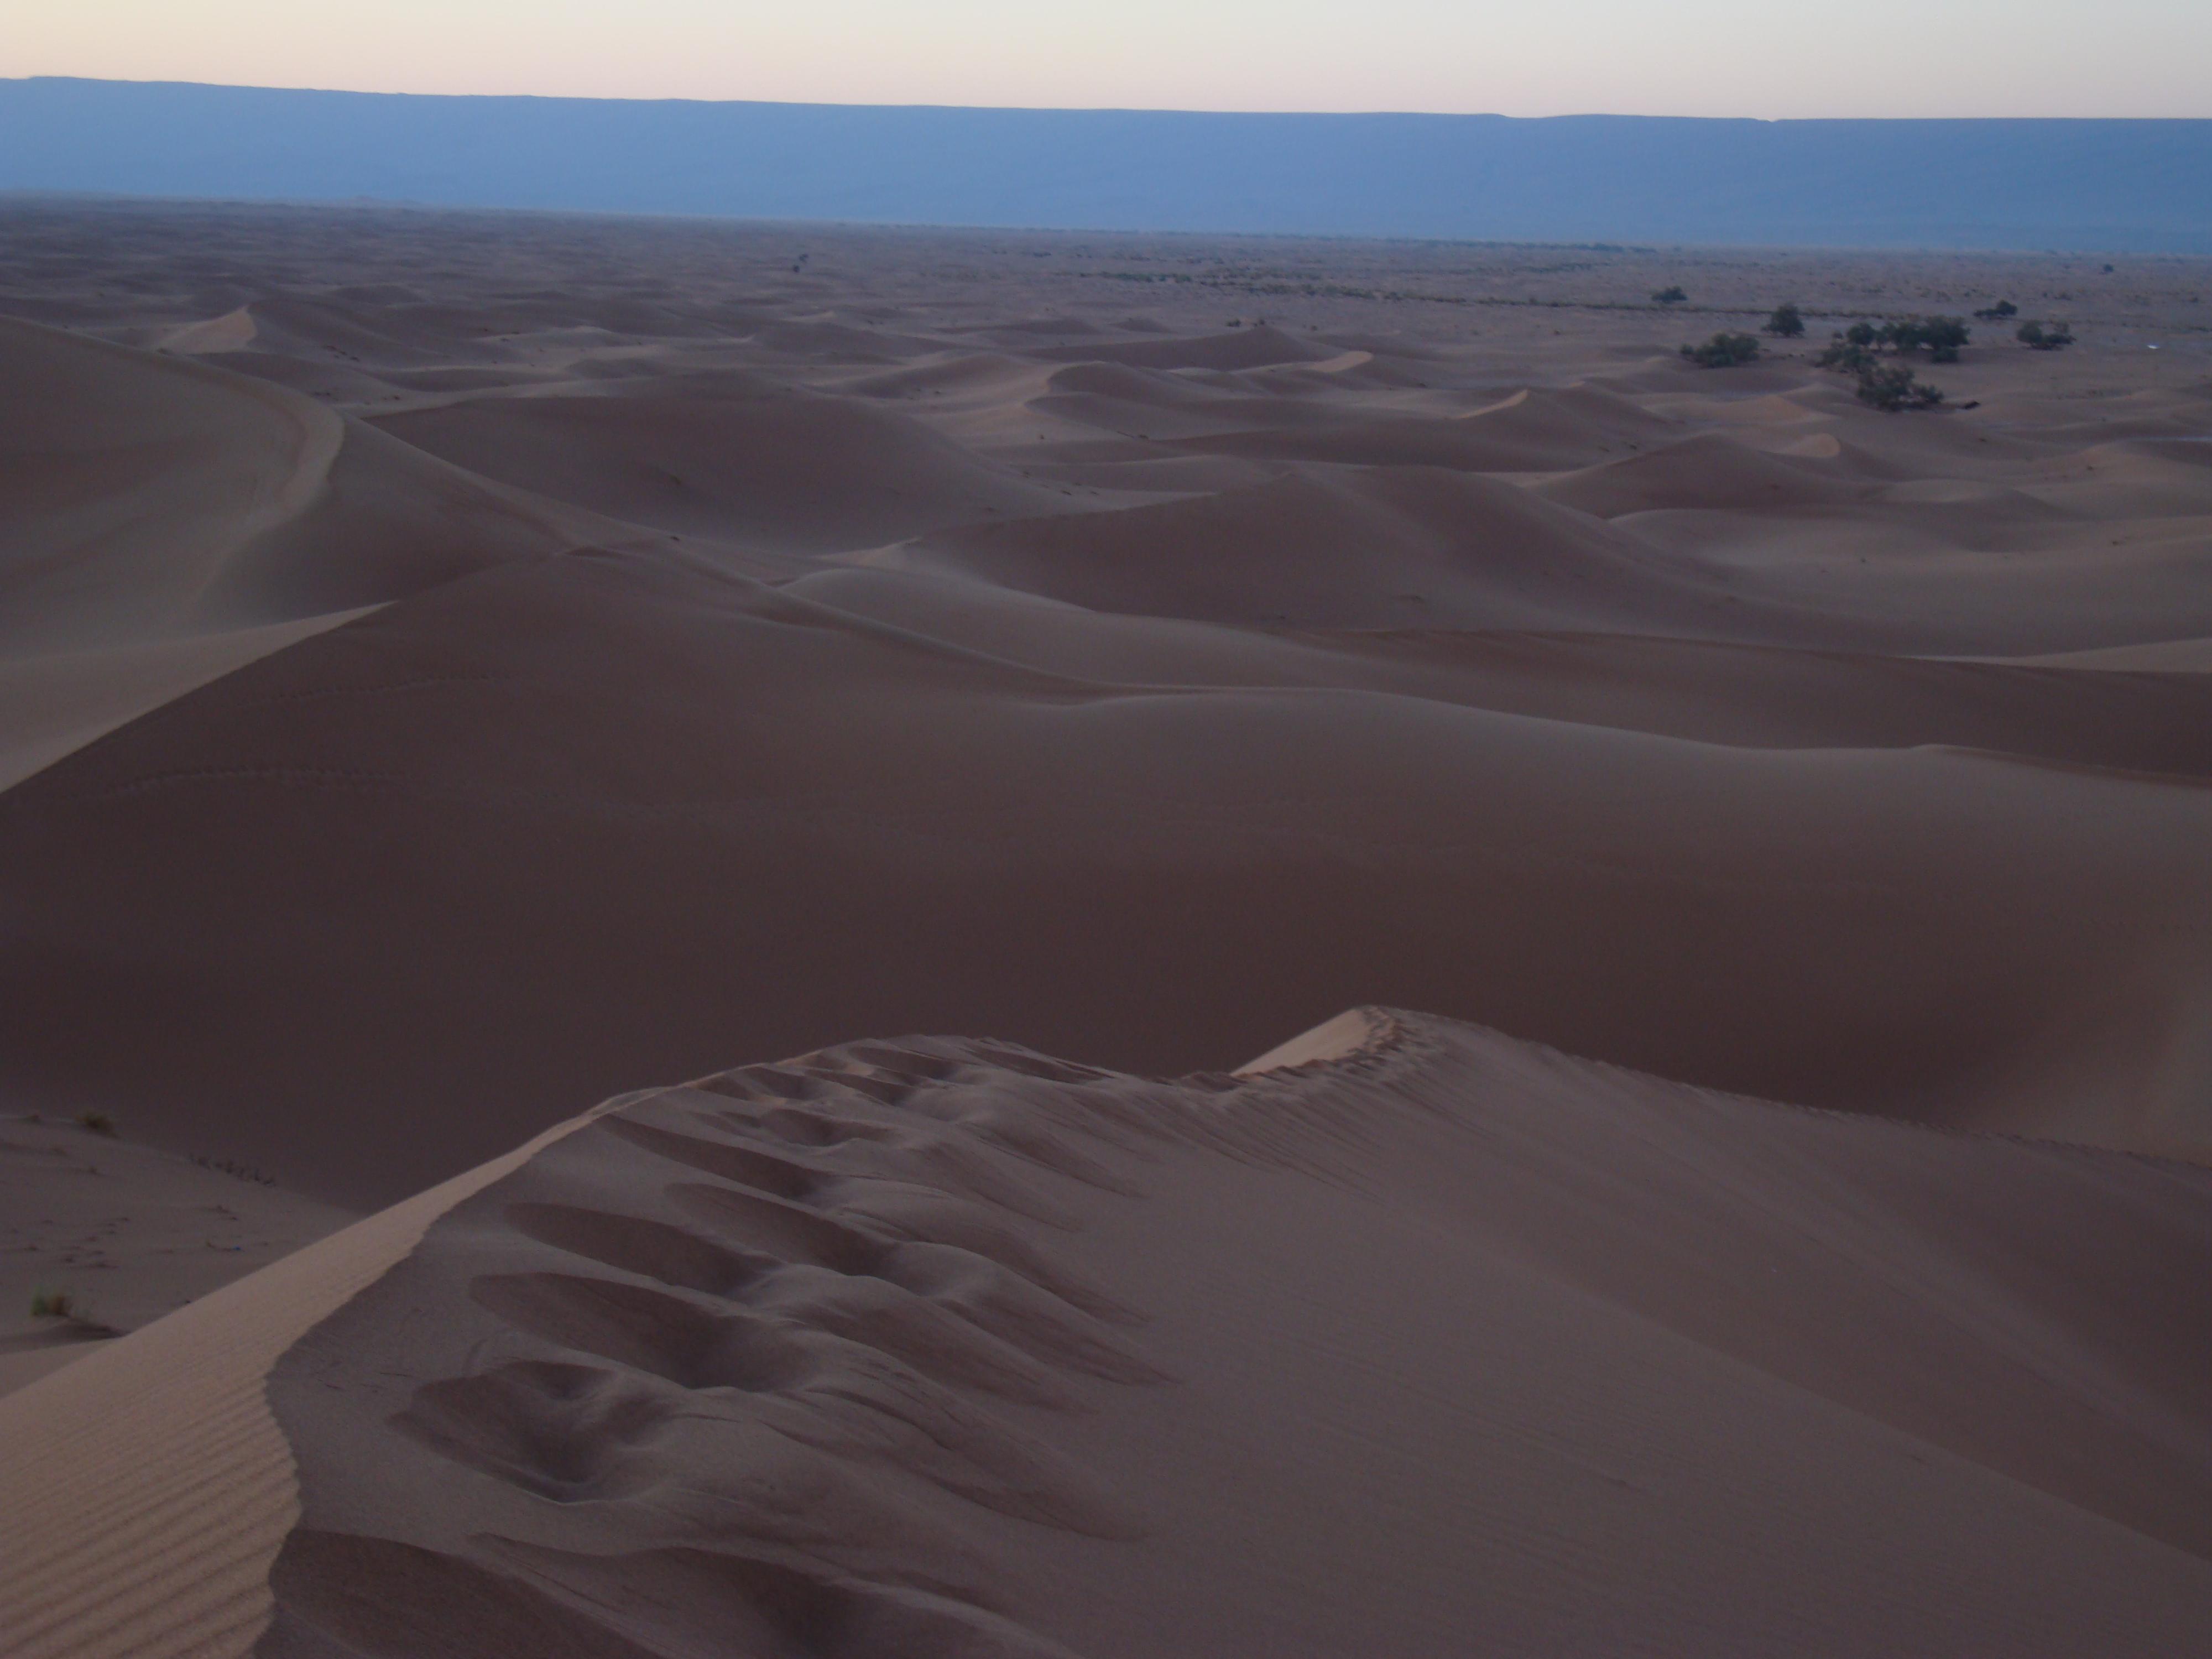 Take a trip to the Moroccan desert